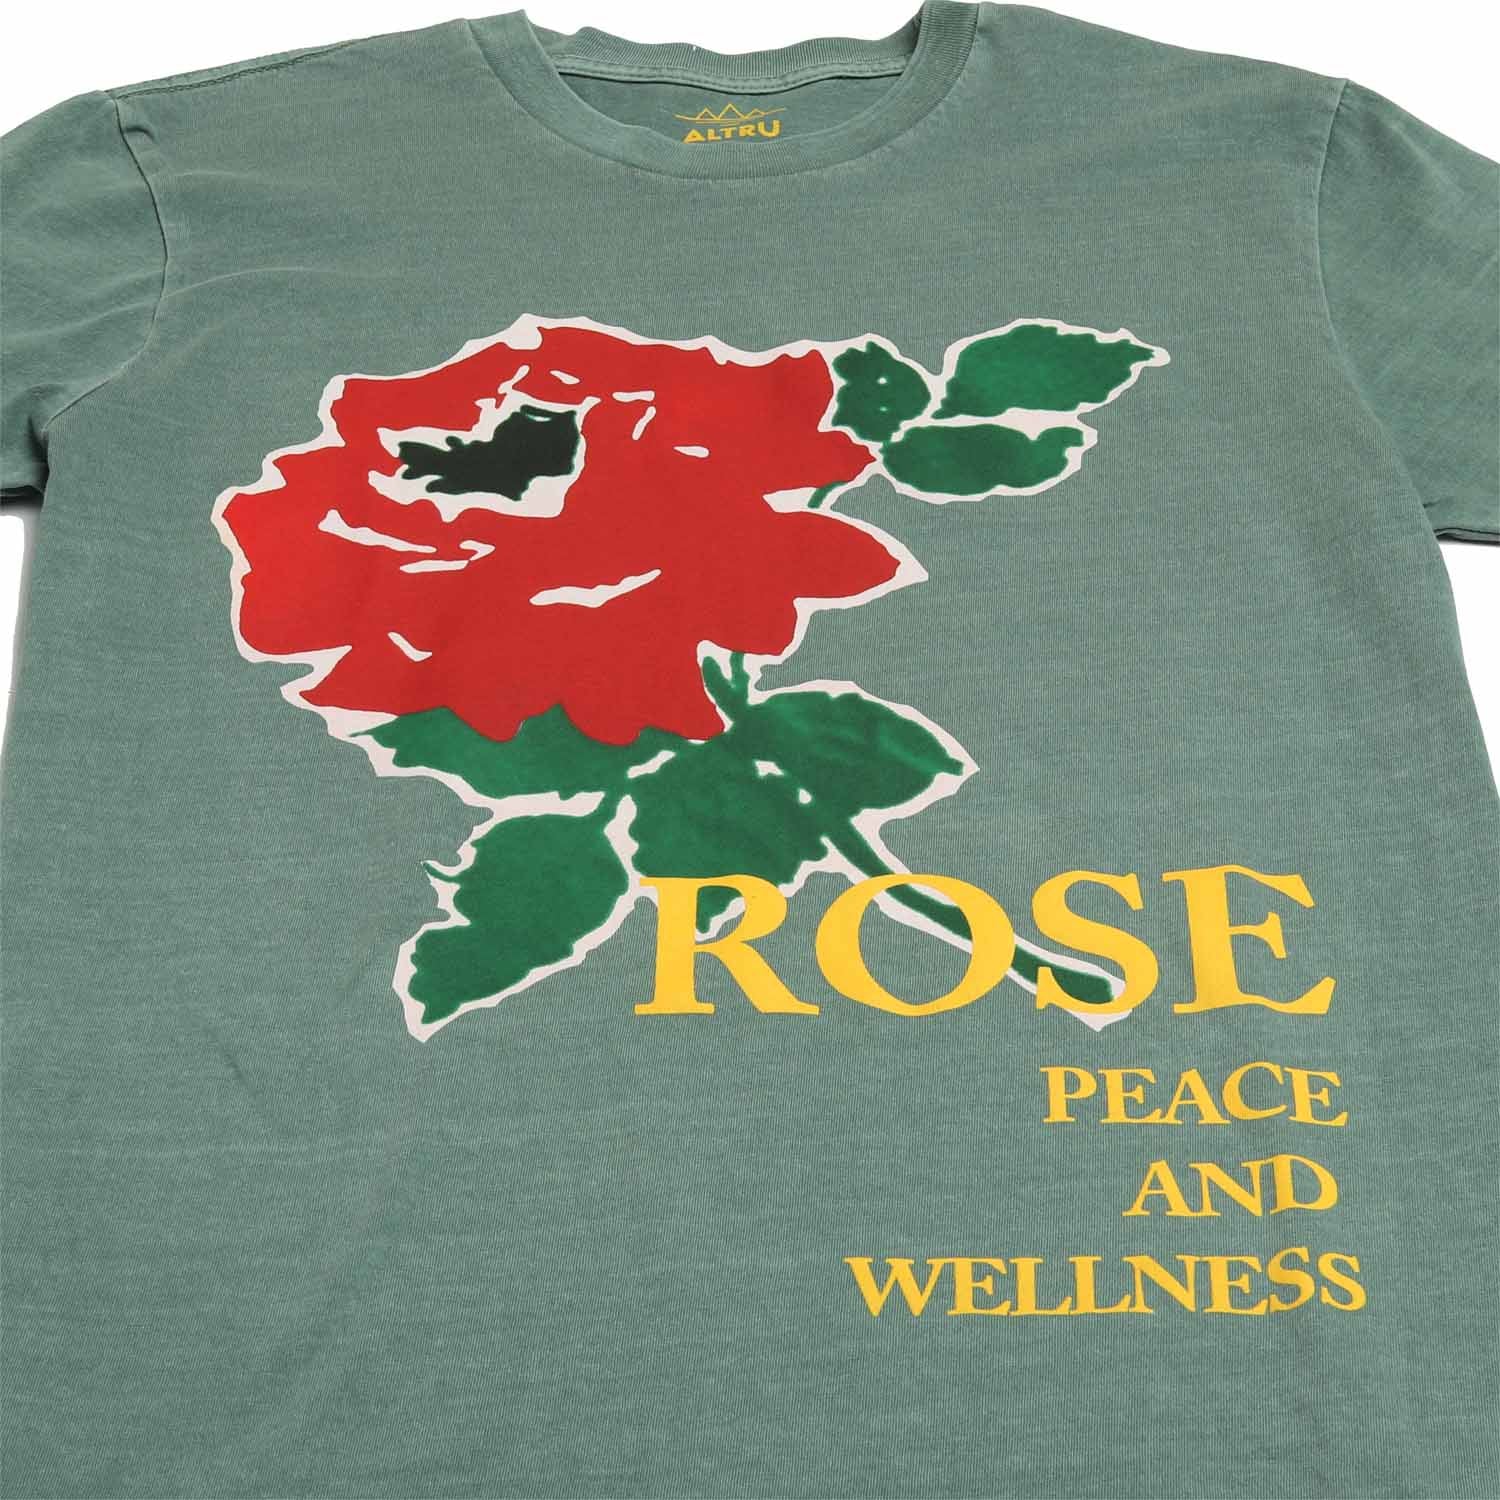 Rose Wellness Tee